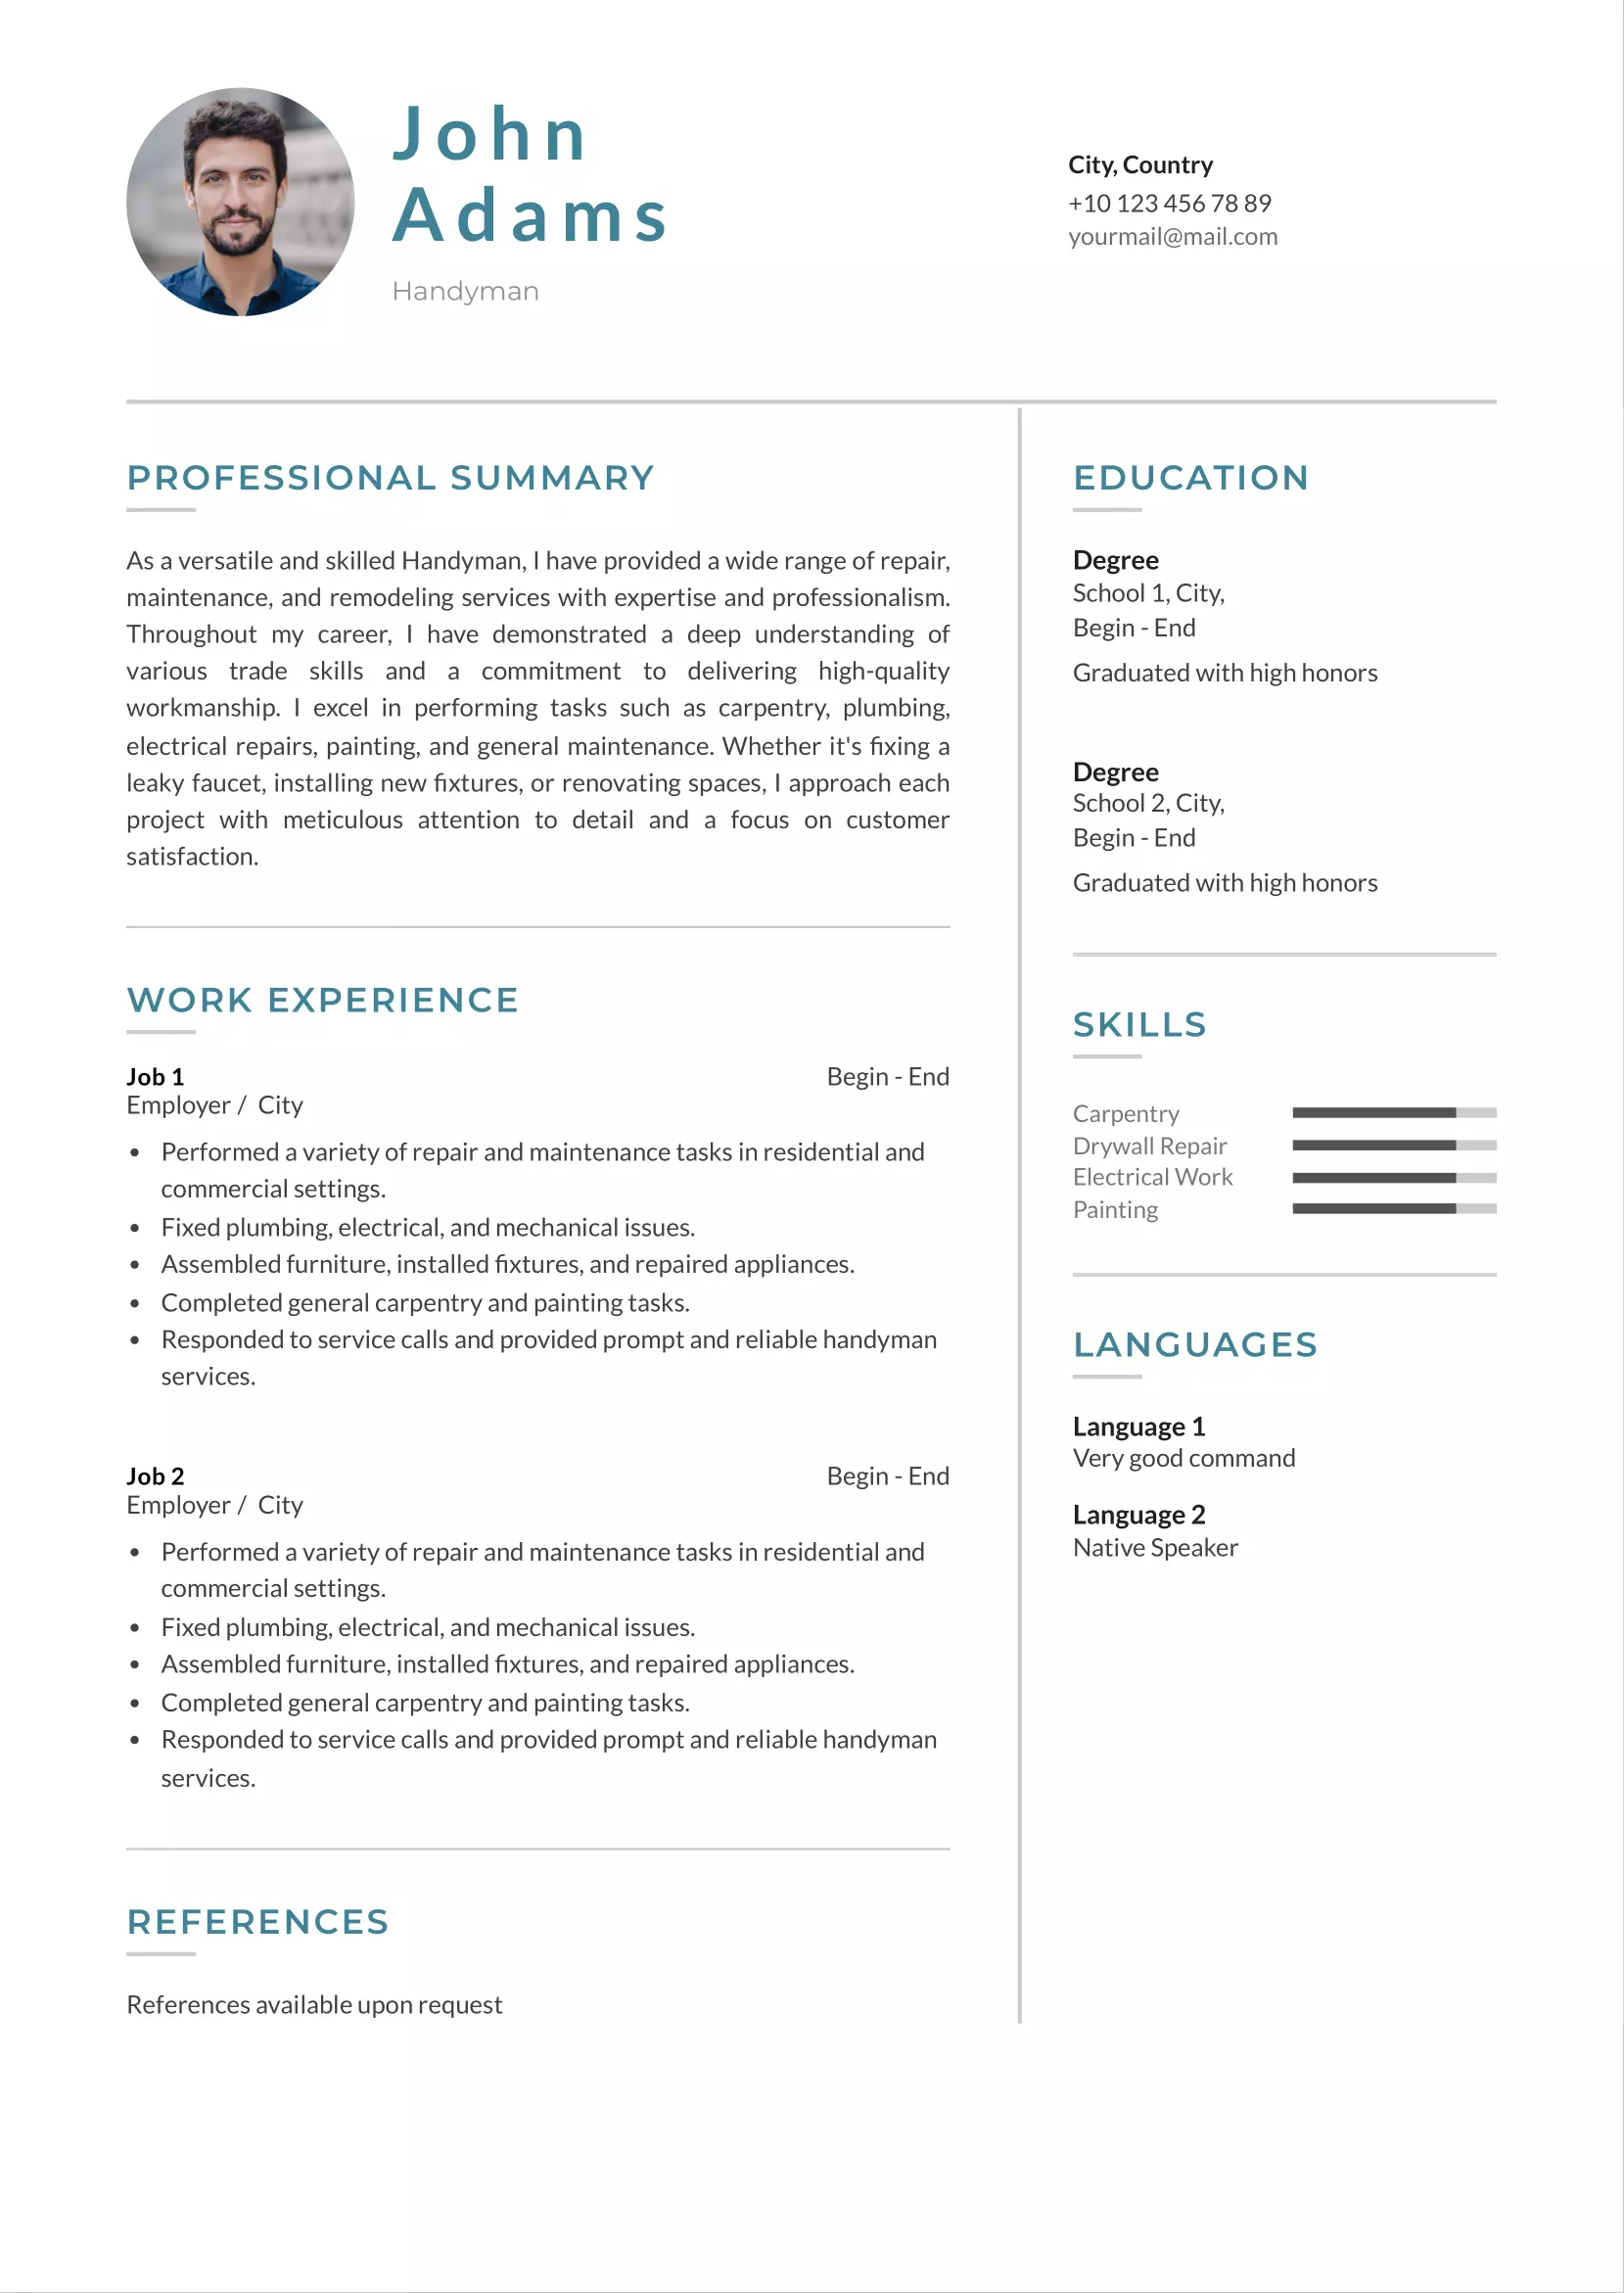 Handyman resume CV